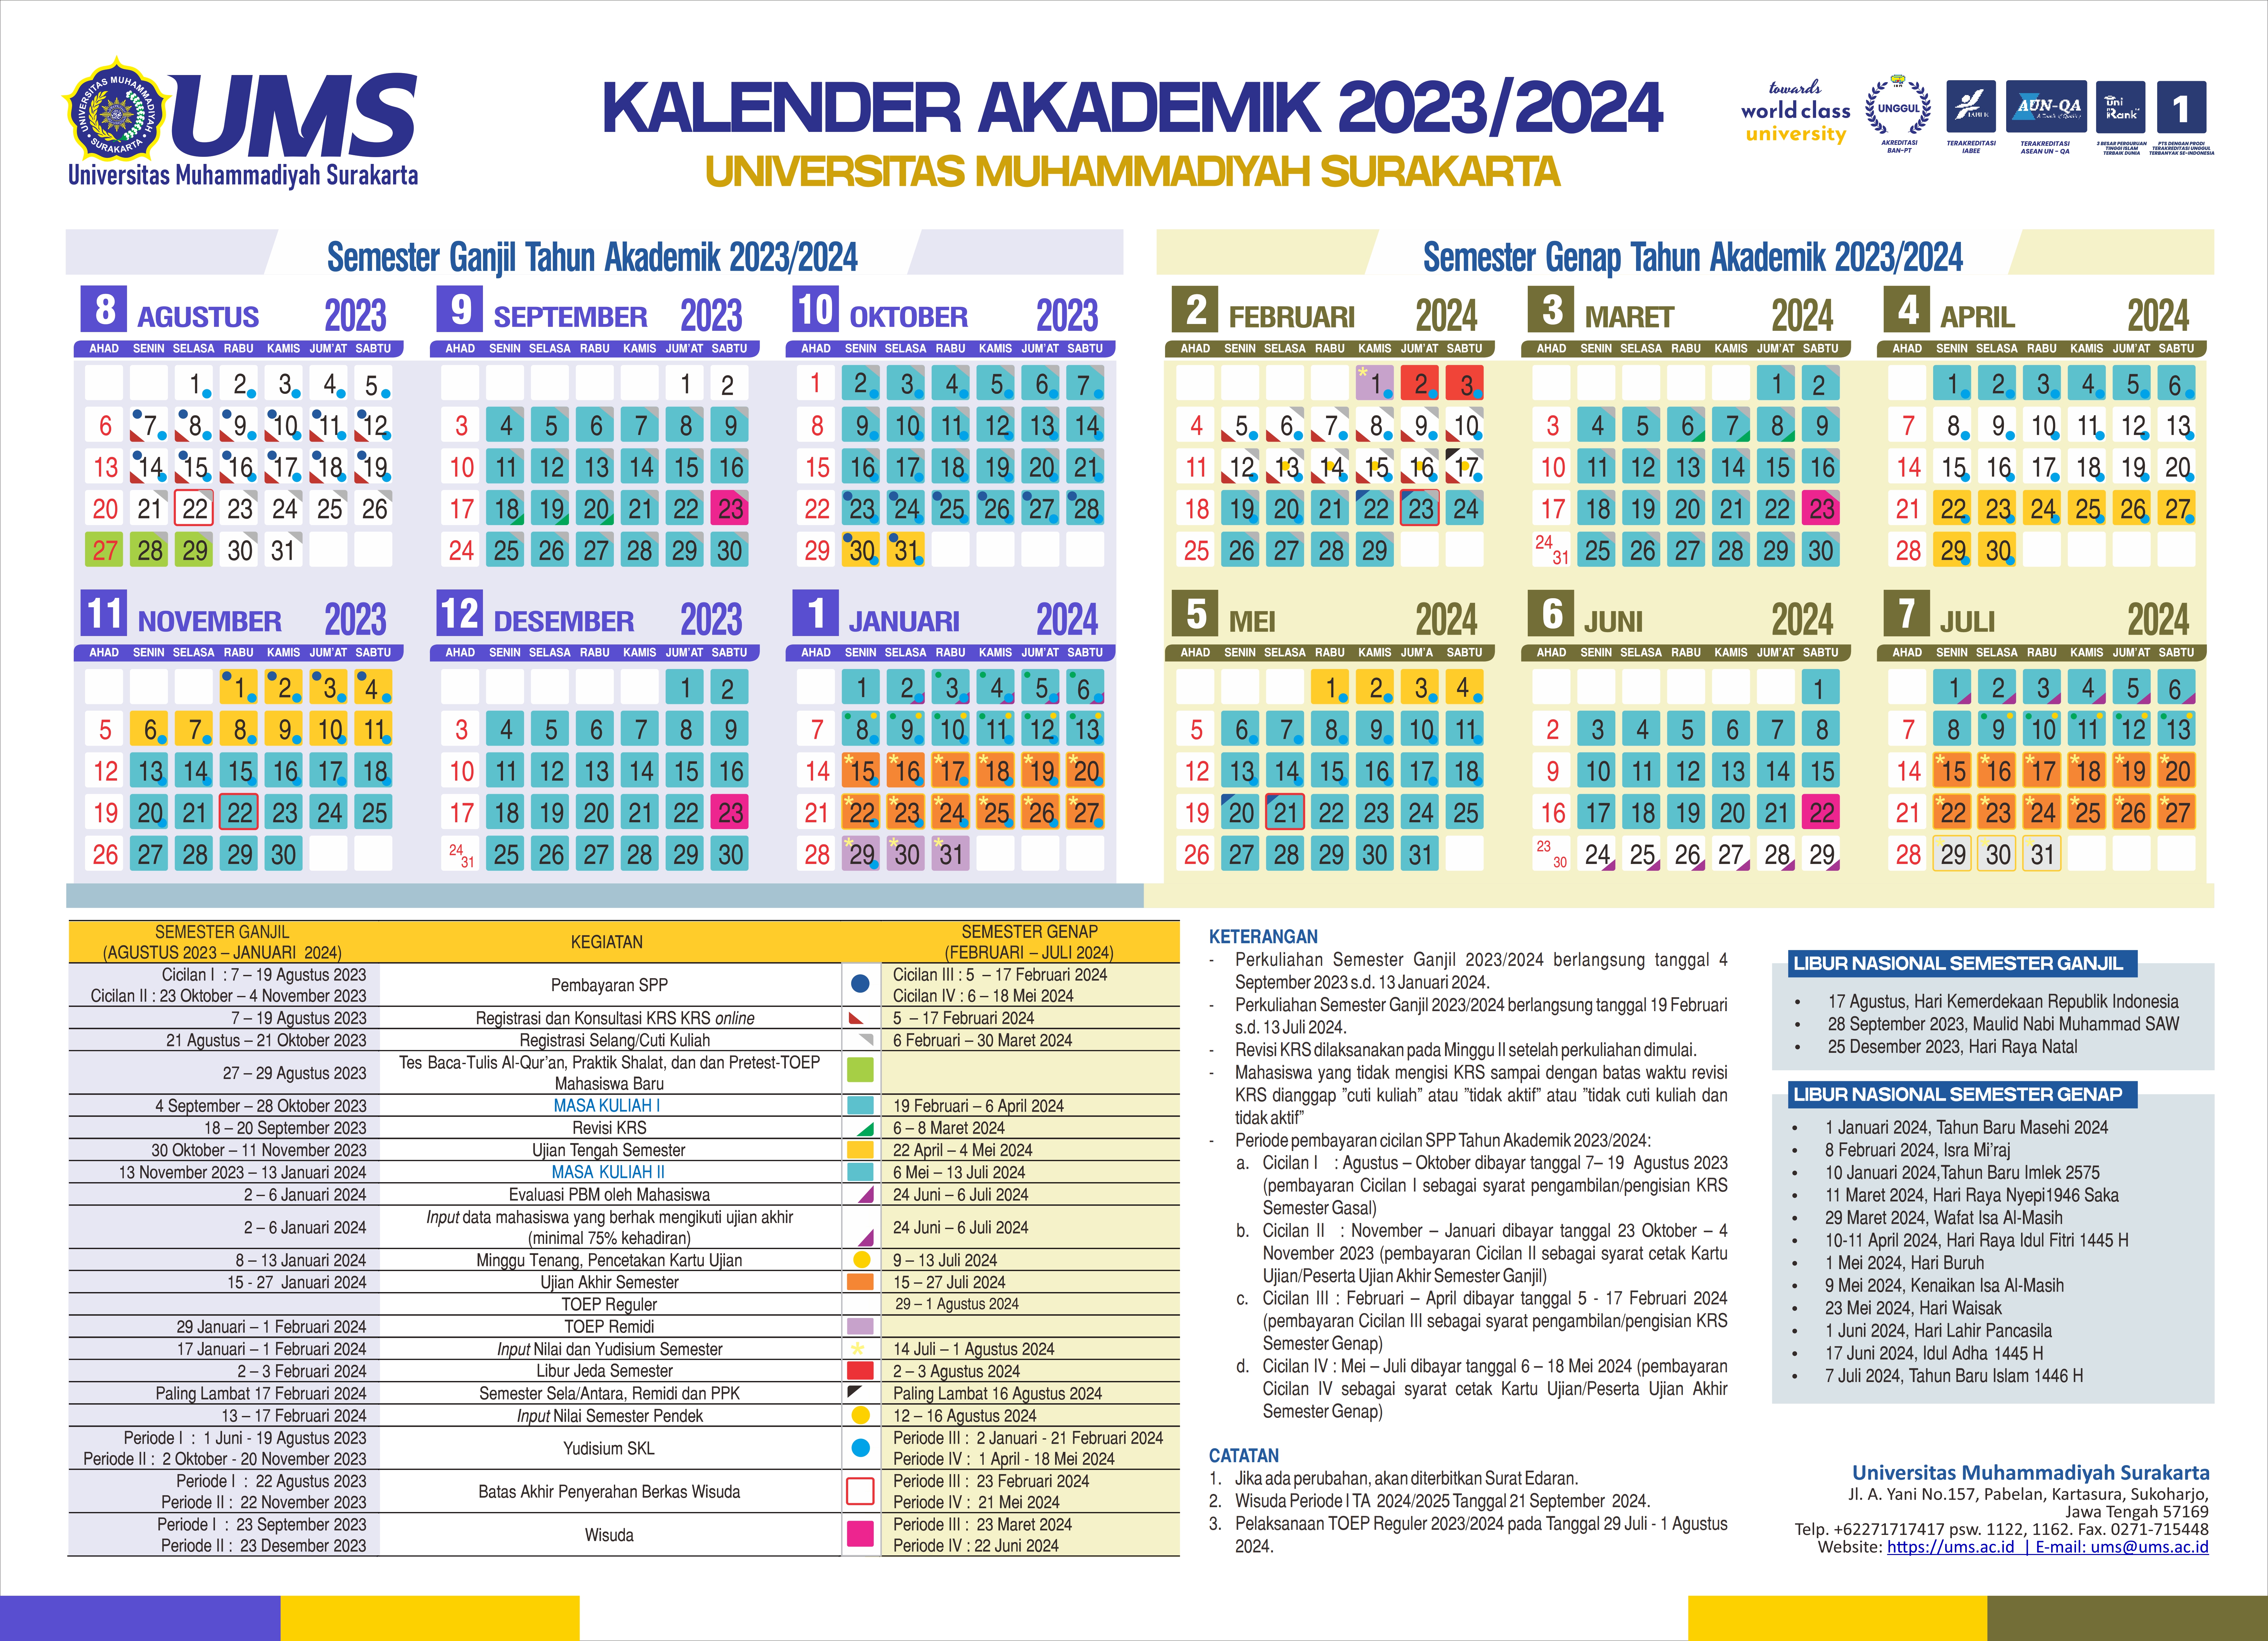 Kalender Akademik UMS